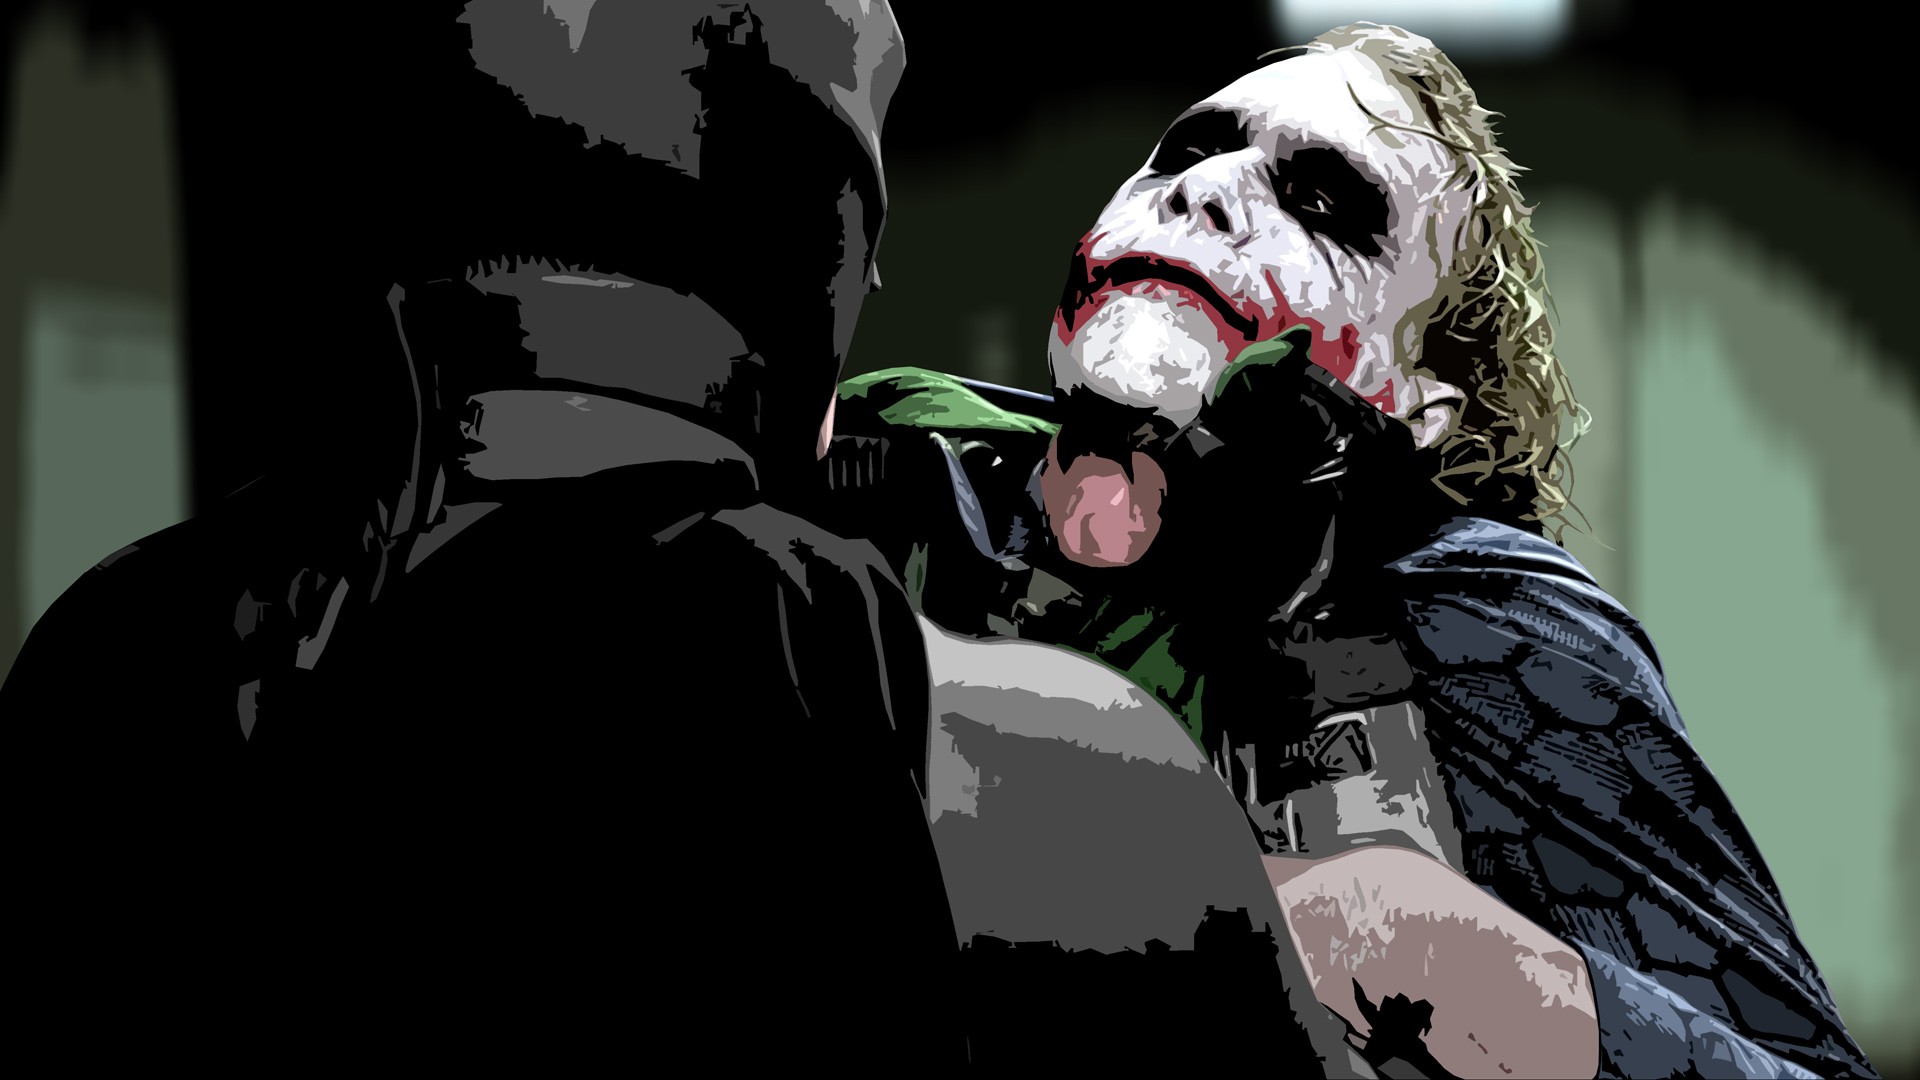 General 1920x1080 movies Batman The Dark Knight Joker MessenjahMatt Heath Ledger villains